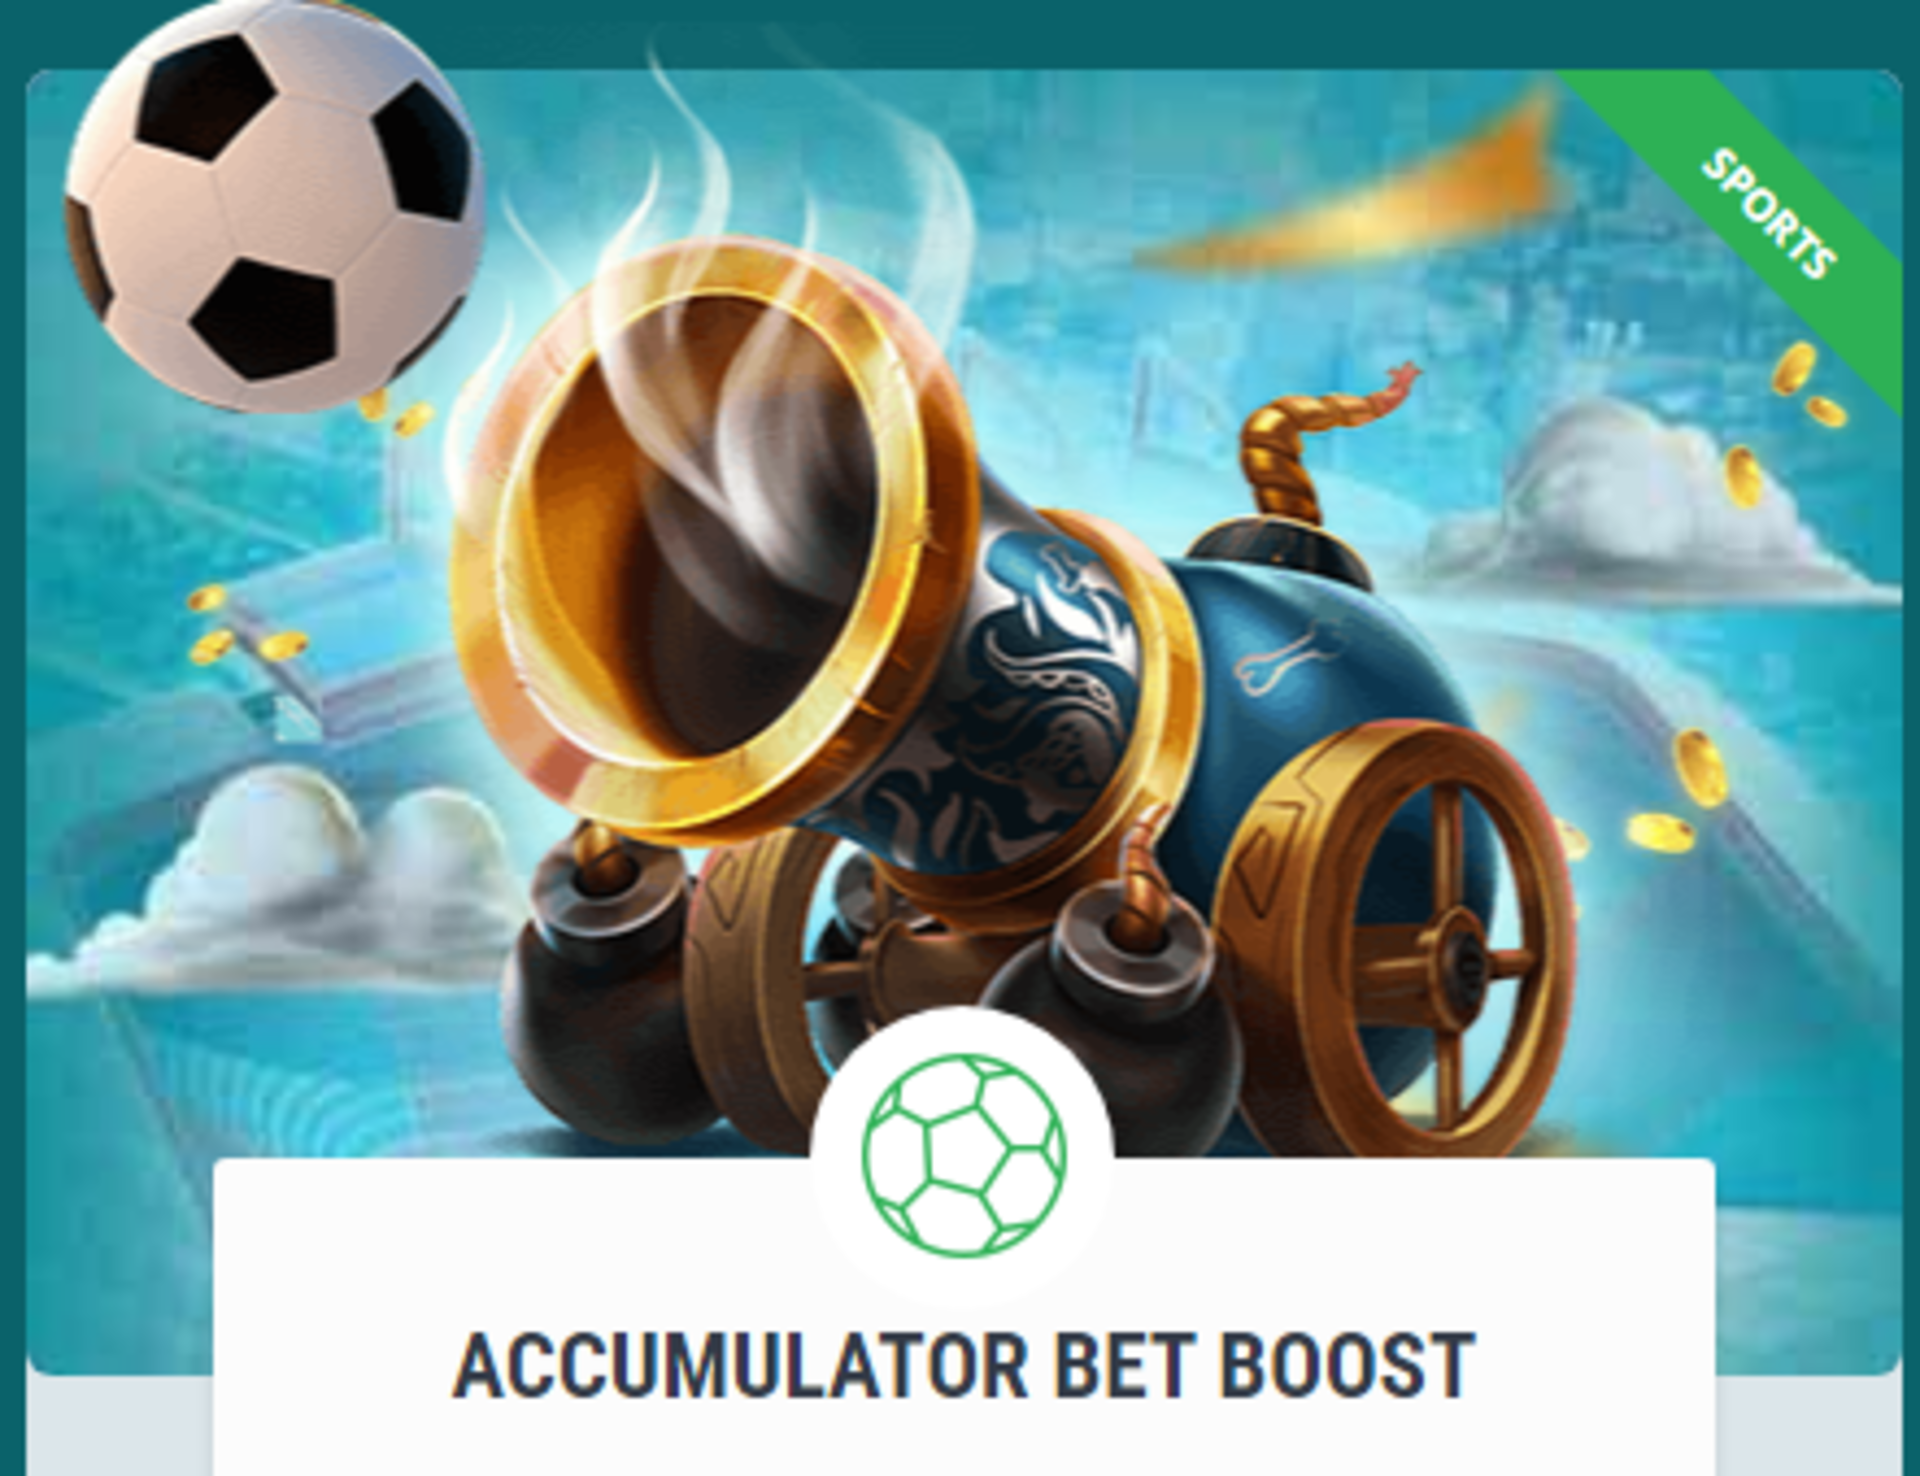 22Bet accumulator bet boost